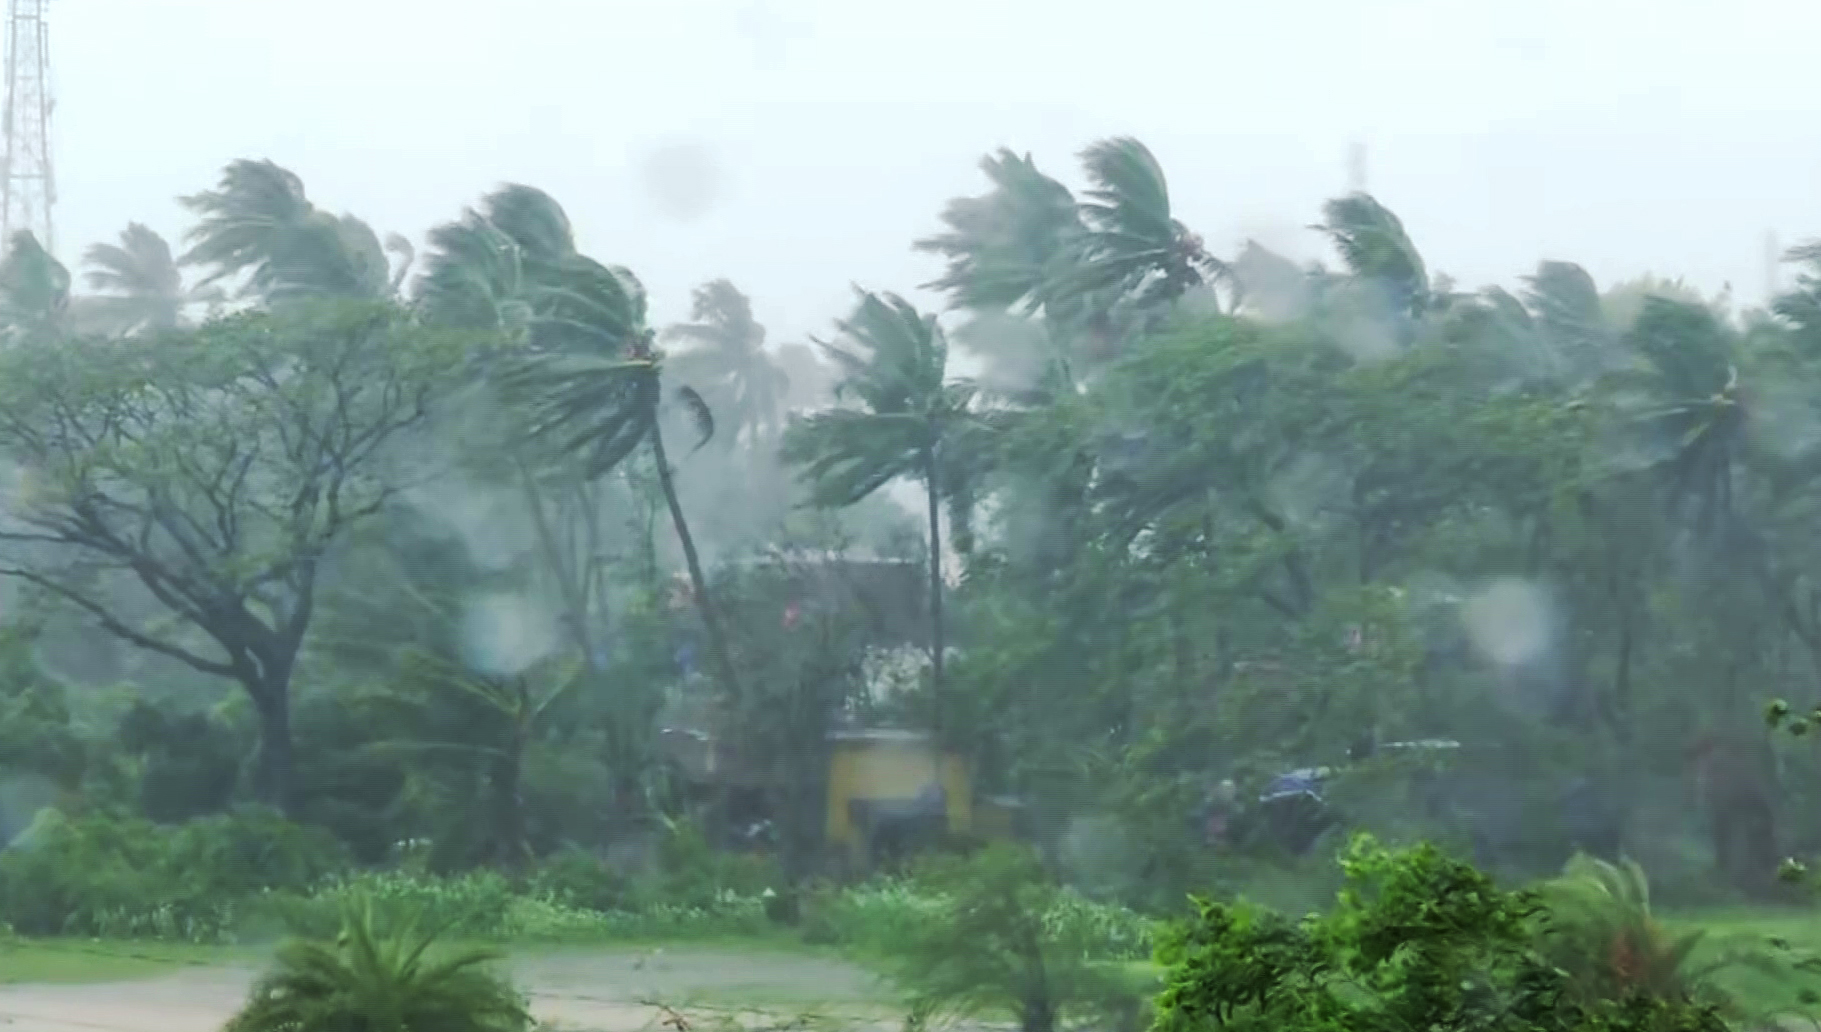 Covid-ravaged Mumbai braces for Cyclone Nisarga, landfall likely near Alibaug with 100 kmph wind speed